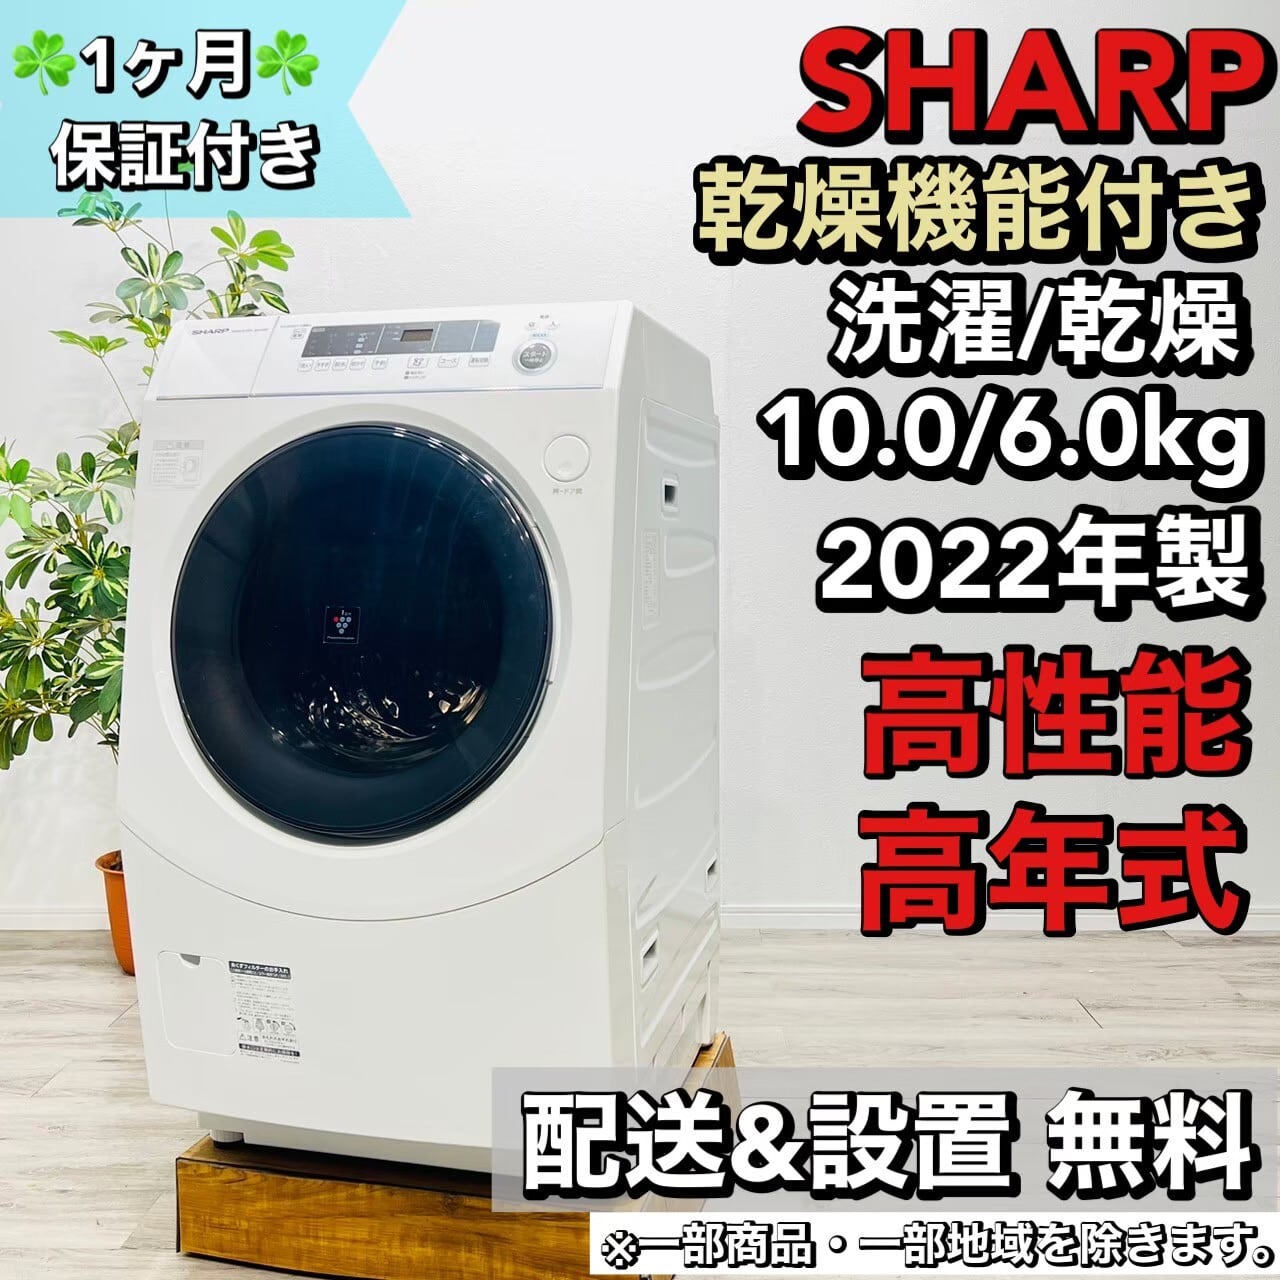 ♦️SHARP a1686 ドラム式洗濯機 10.0kg 2022年製 65♦️